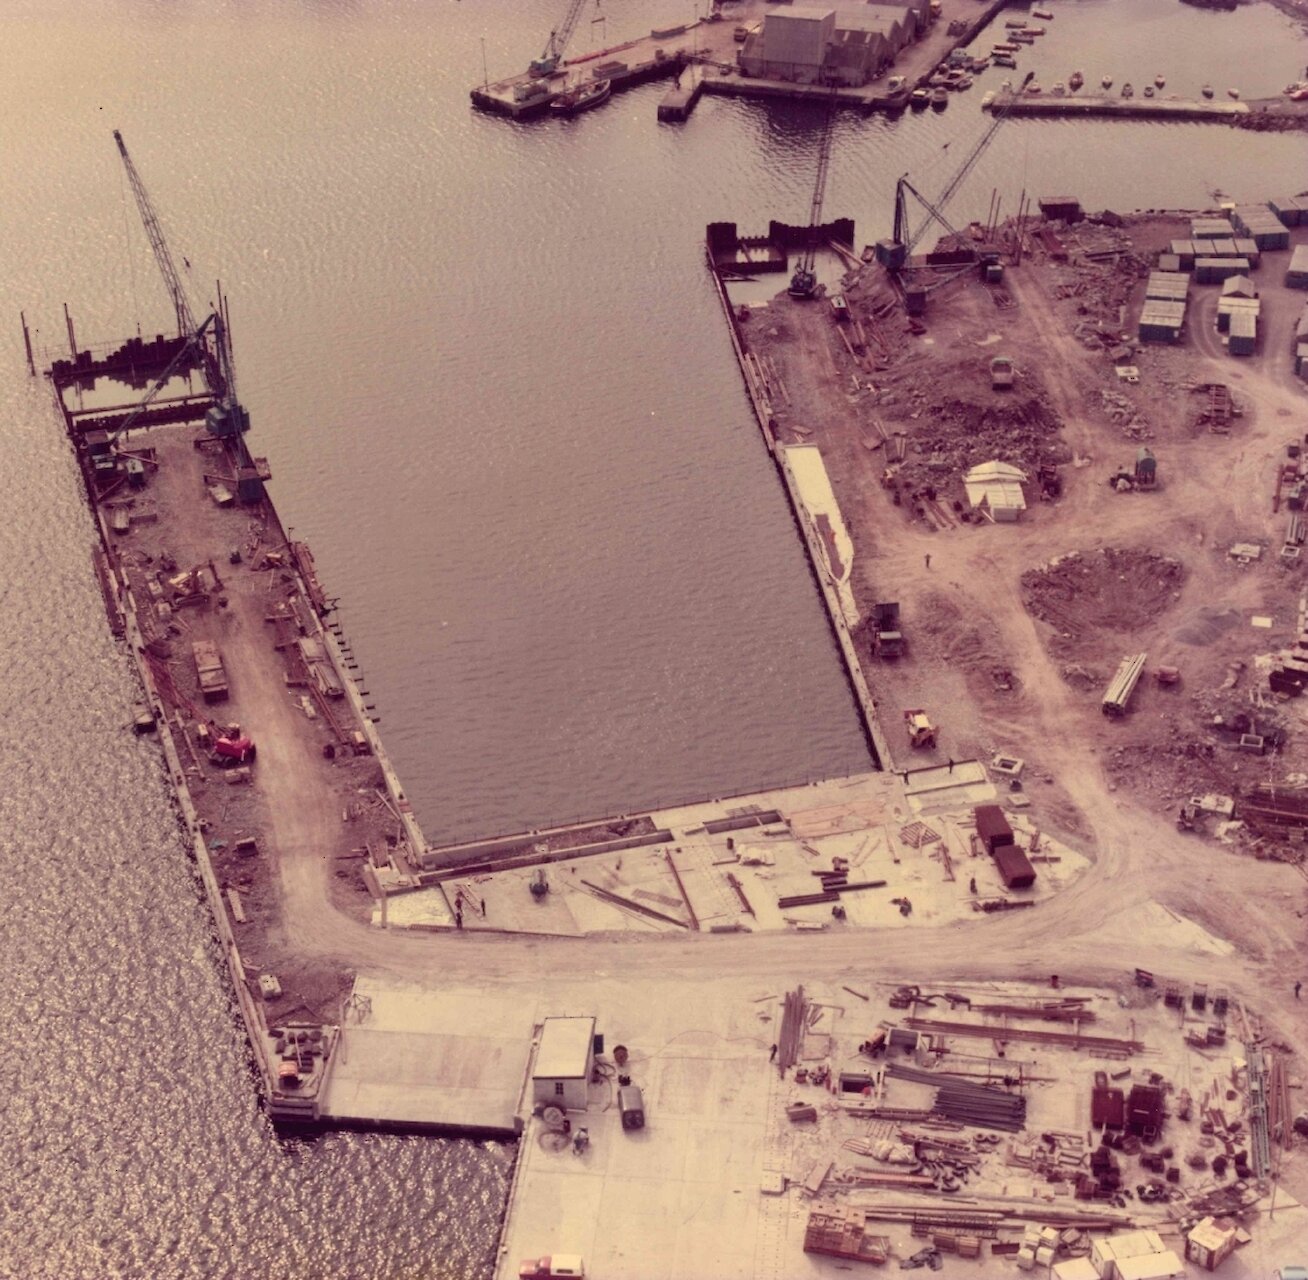 Holmsgarth under construction in 1970s